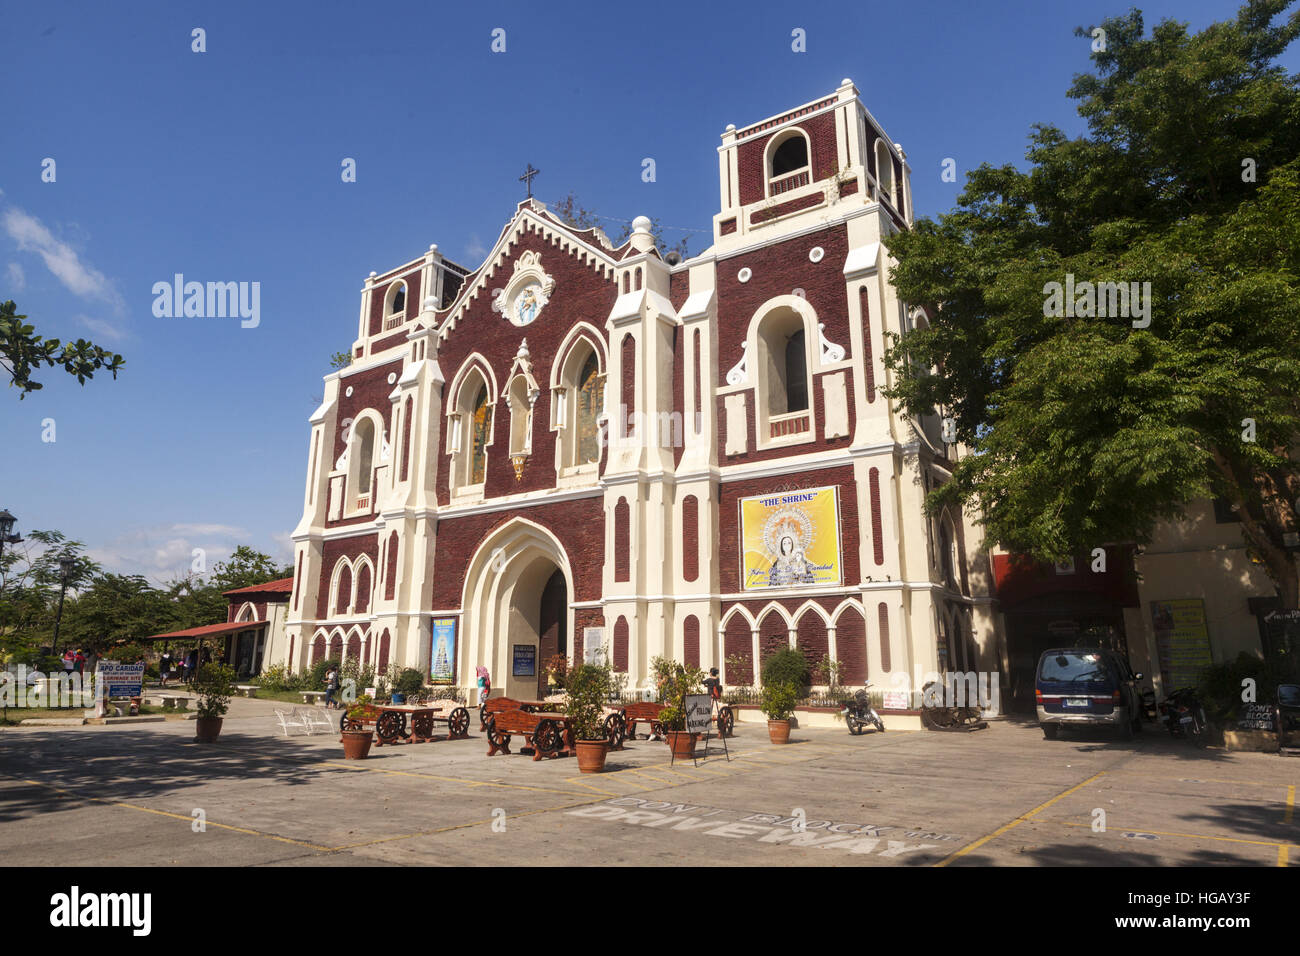 Facade of the Bantay Catholic Church at Bantay, Ilocos Sur, Luzon Island, Philippines. Stock Photo